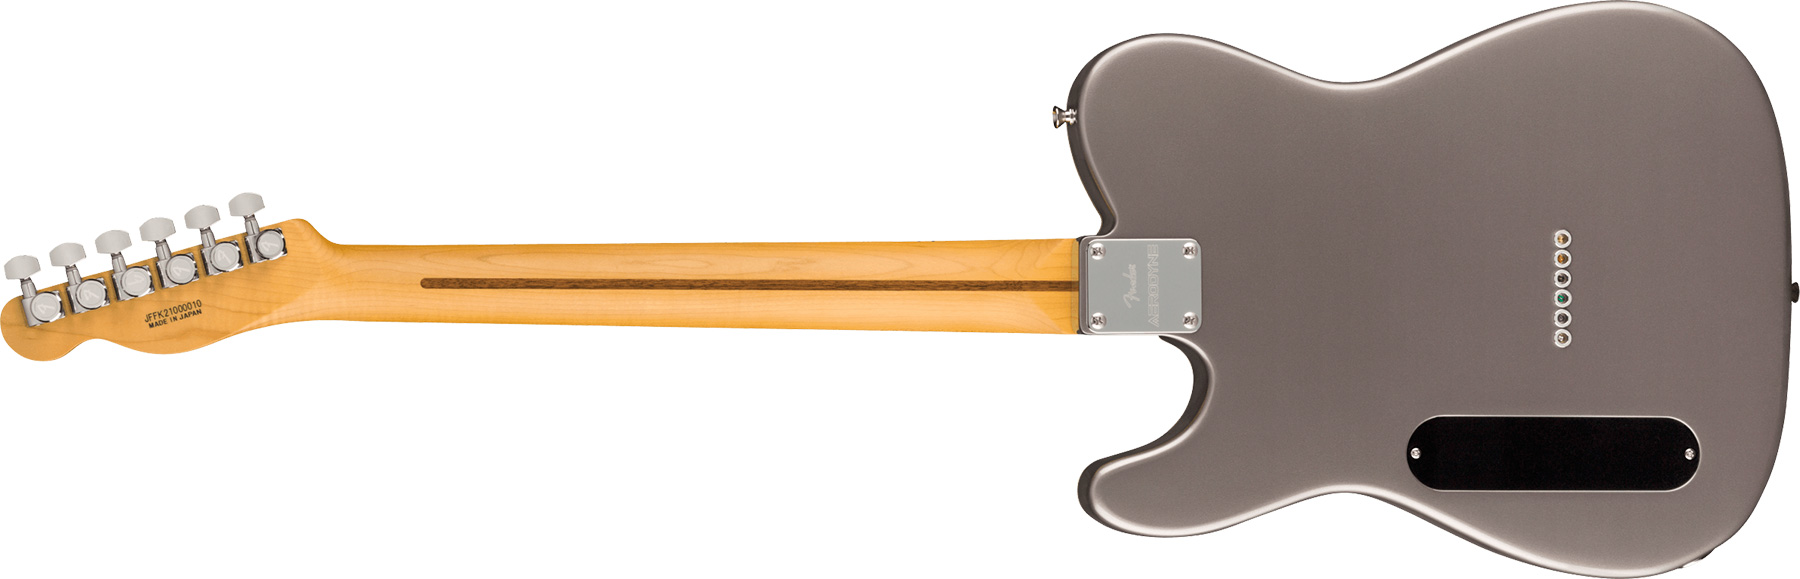 Fender Tele Aerodyne Special Jap 2s Ht Mn - Dolphin Gray Metallic - Guitare Électrique Forme Tel - Variation 1